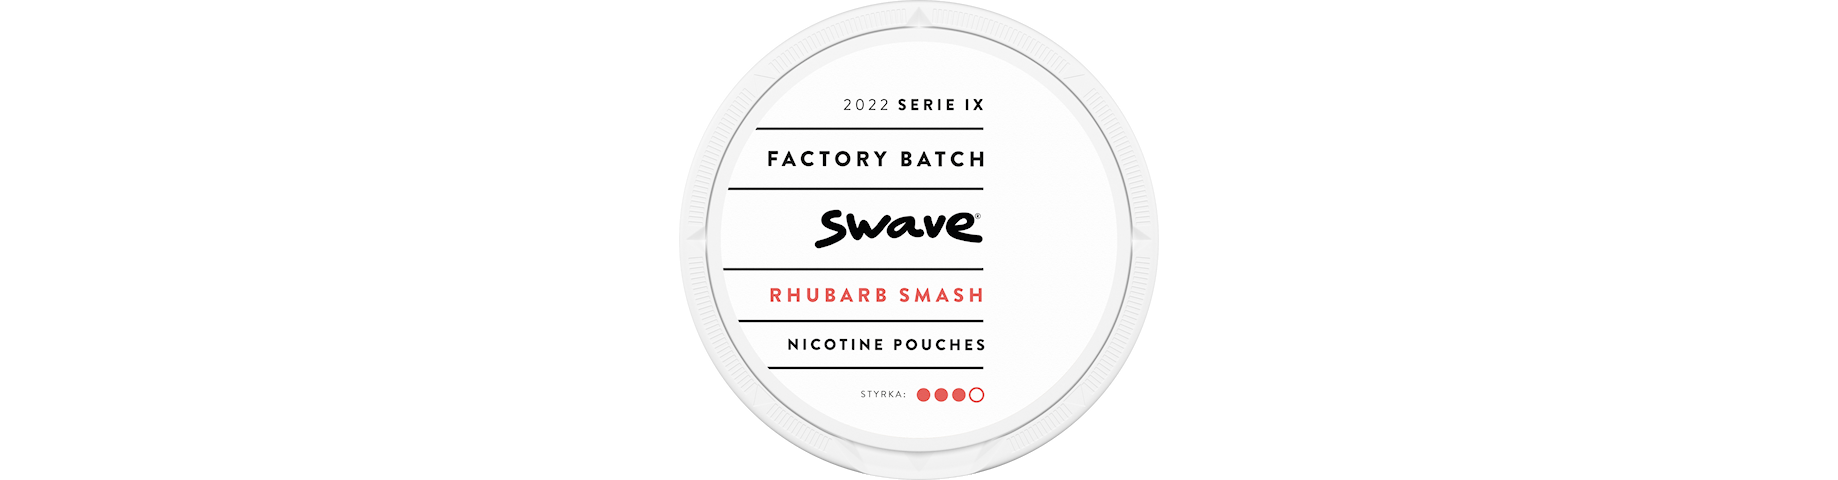 Swave Factory Batch IX Rhubarb Smash Slim Strong